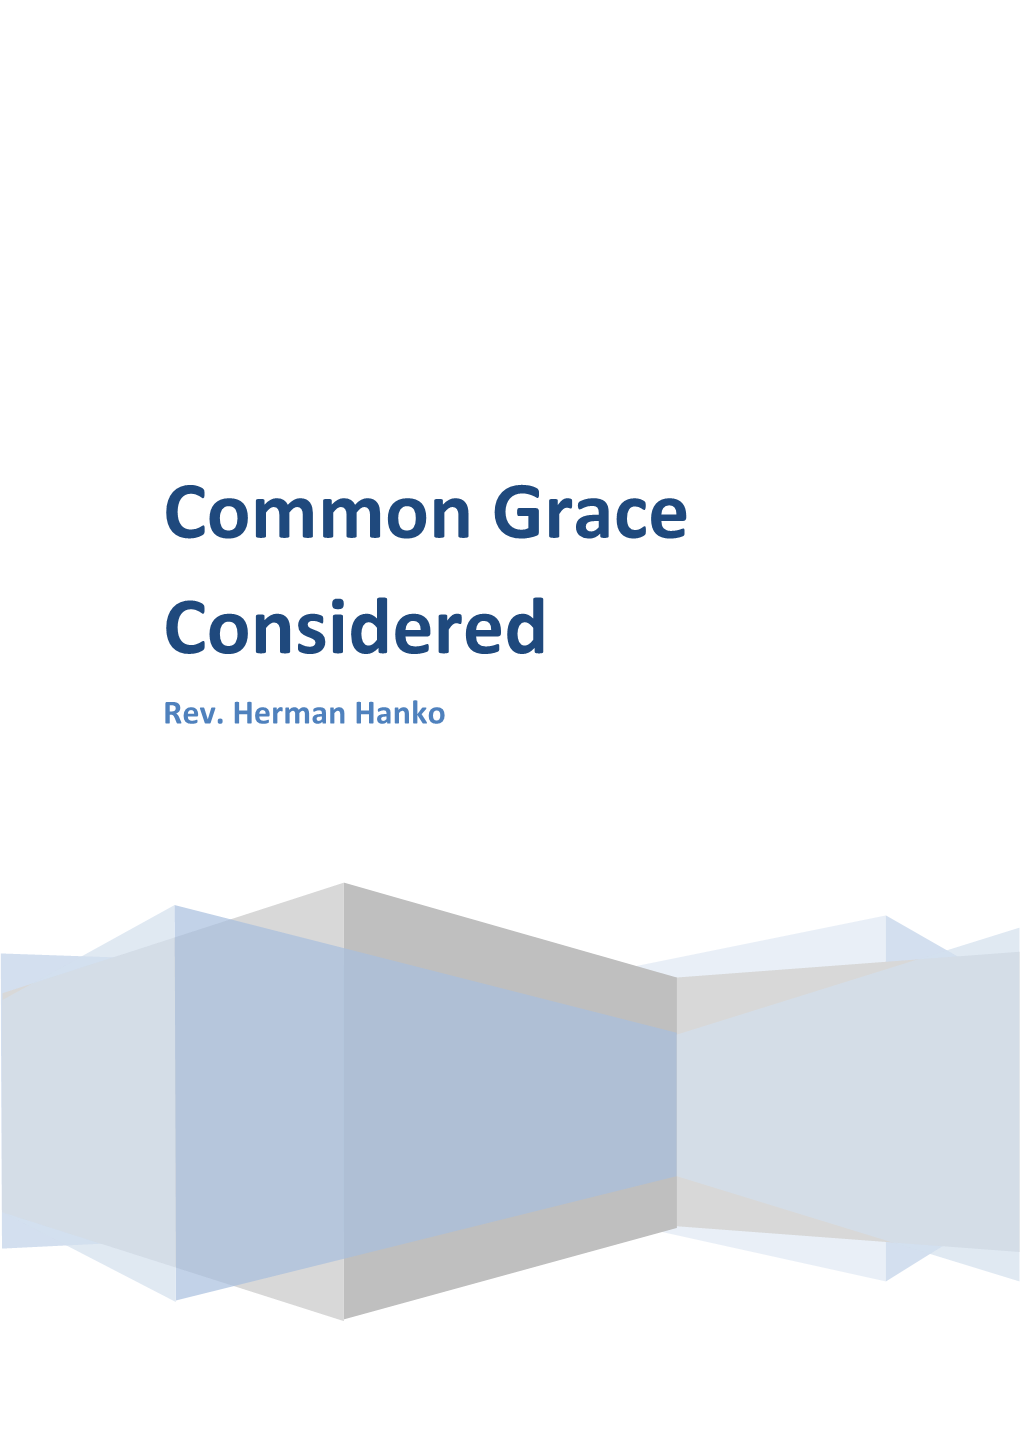 Common Grace Considered Rev